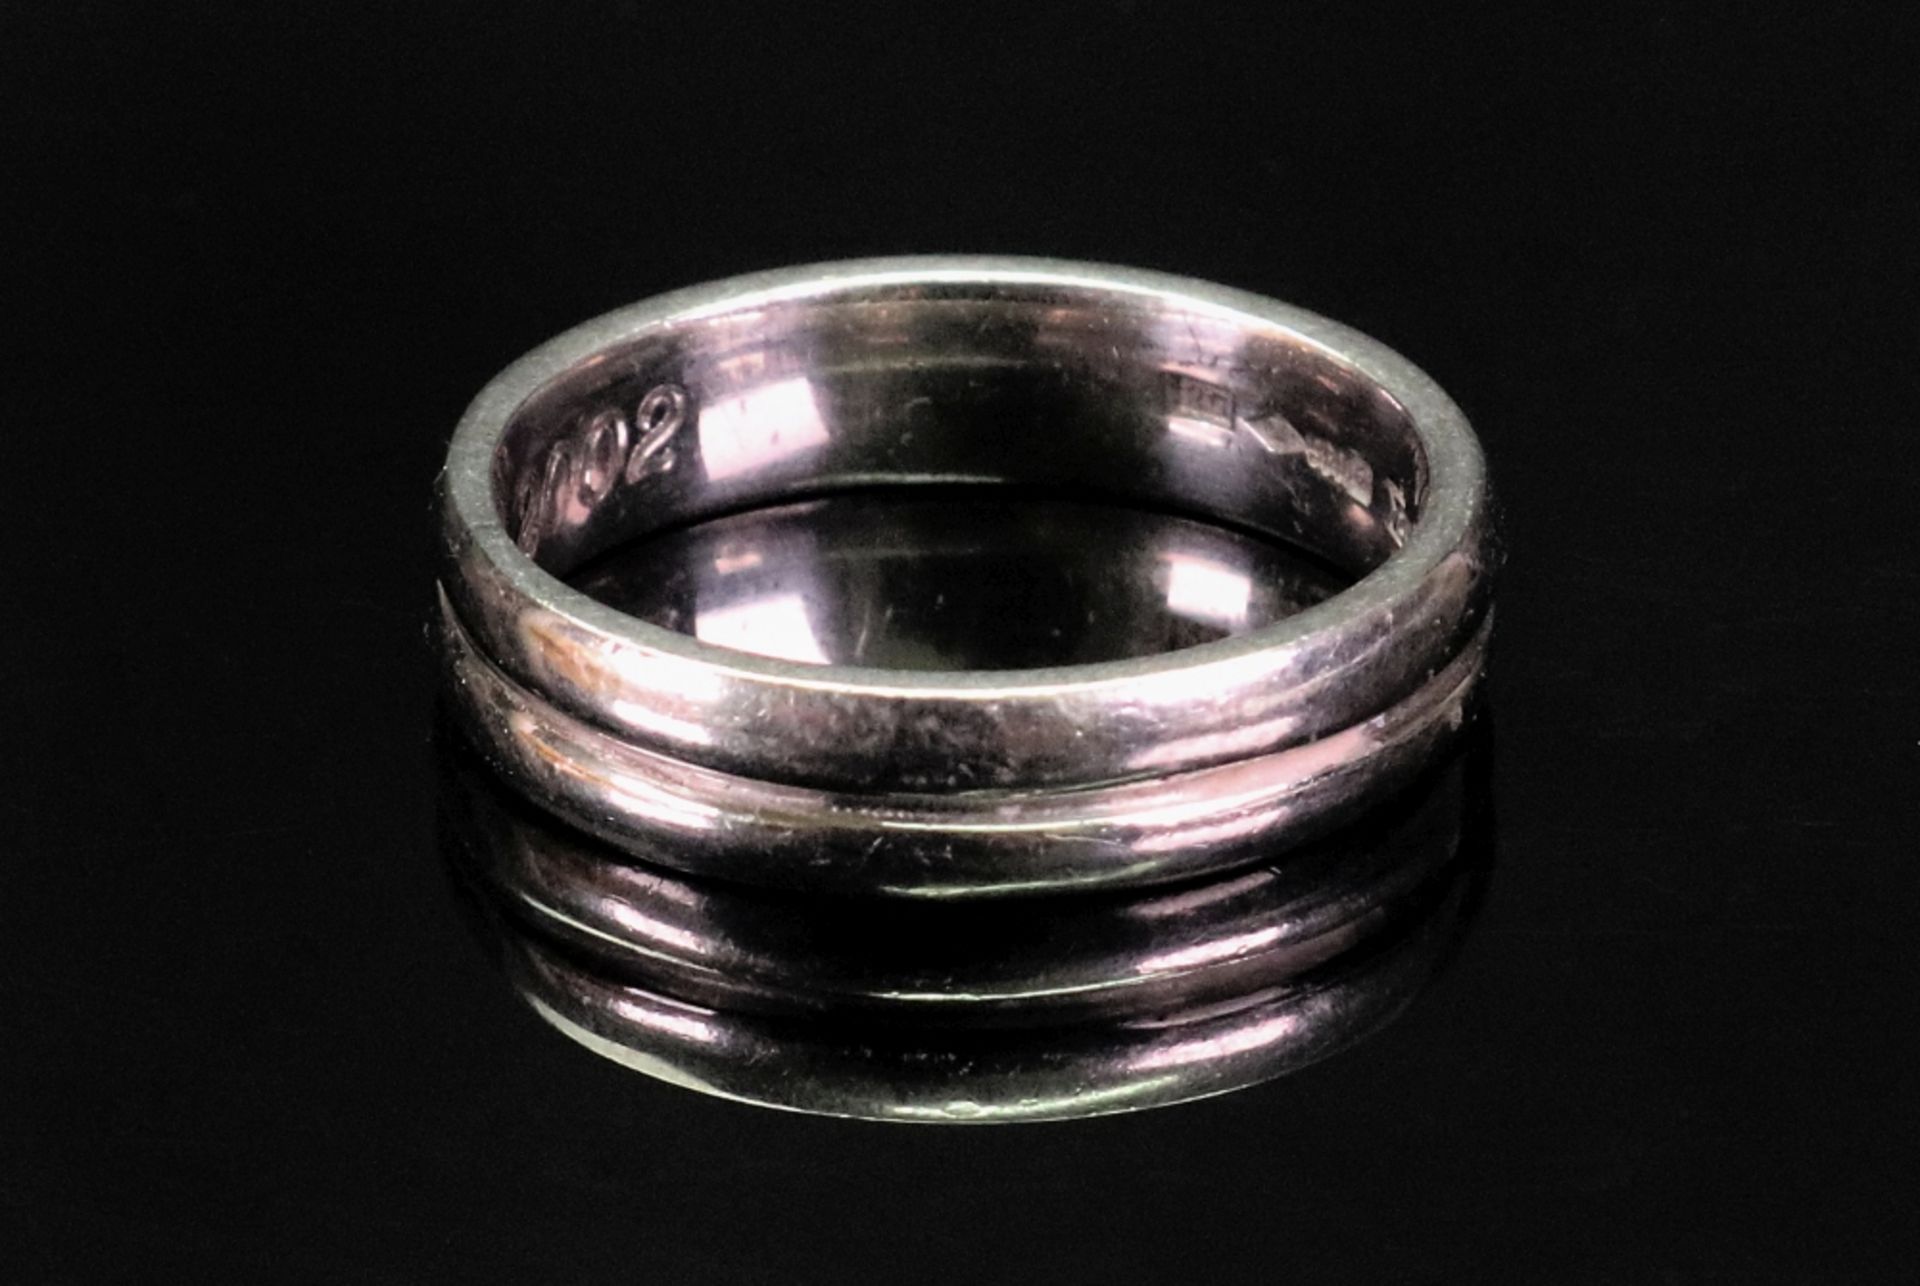 A platinum wedding ring, Millennium marks 2000, maker's mark RG, ring size T 1/2, 11.6g, inscribed.